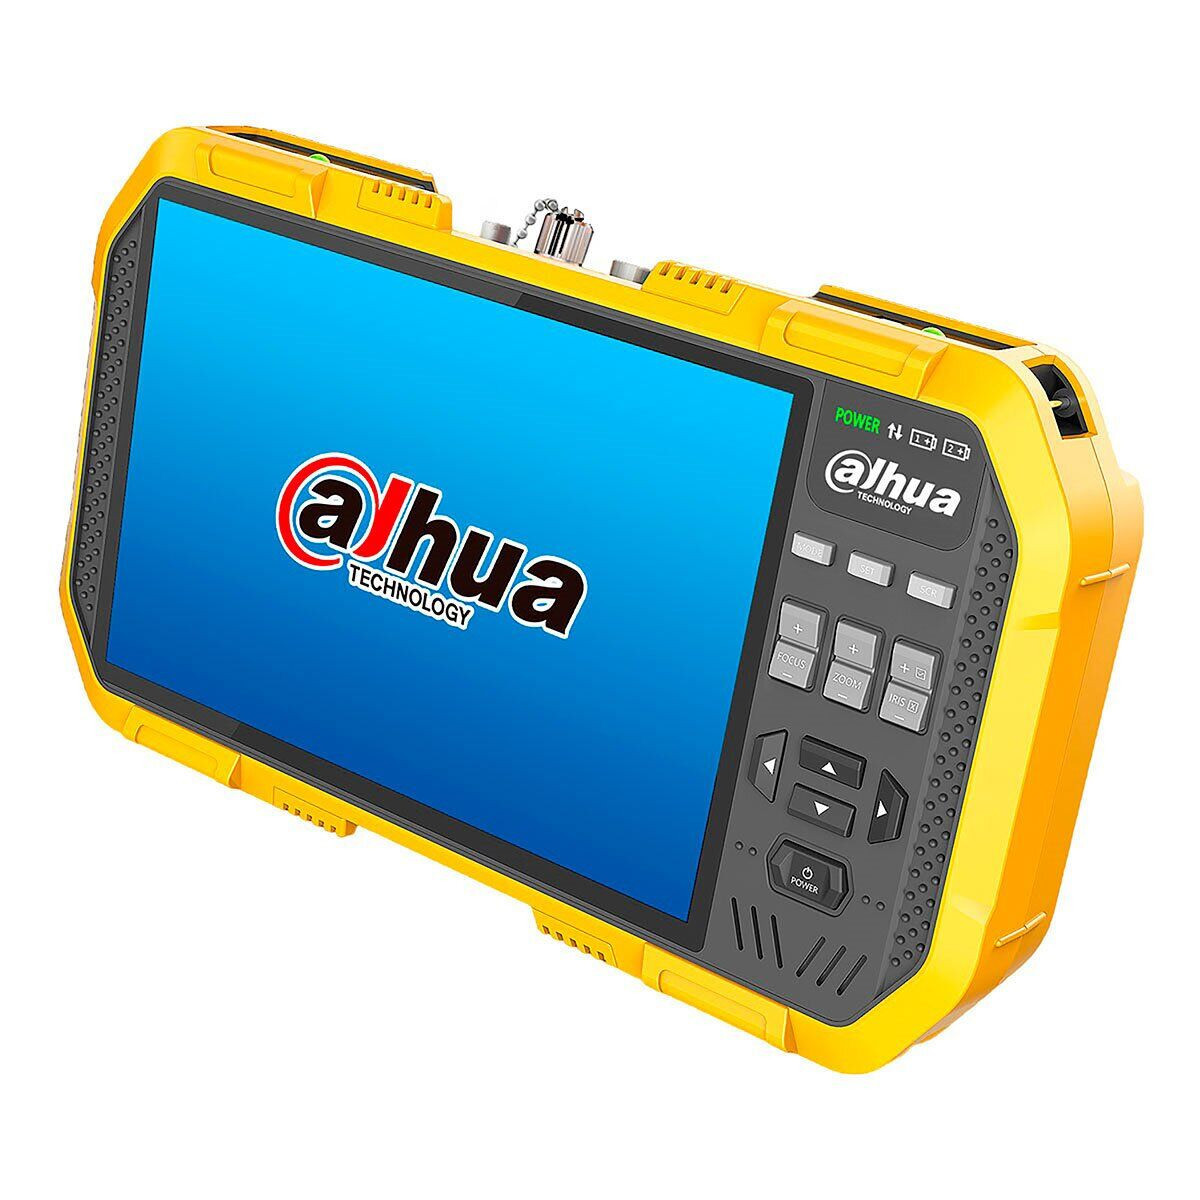 Tester Dahua Soporta Todas las tecnologías de camaras Tester de Señal WIFI y Cable DH-PFM907-E